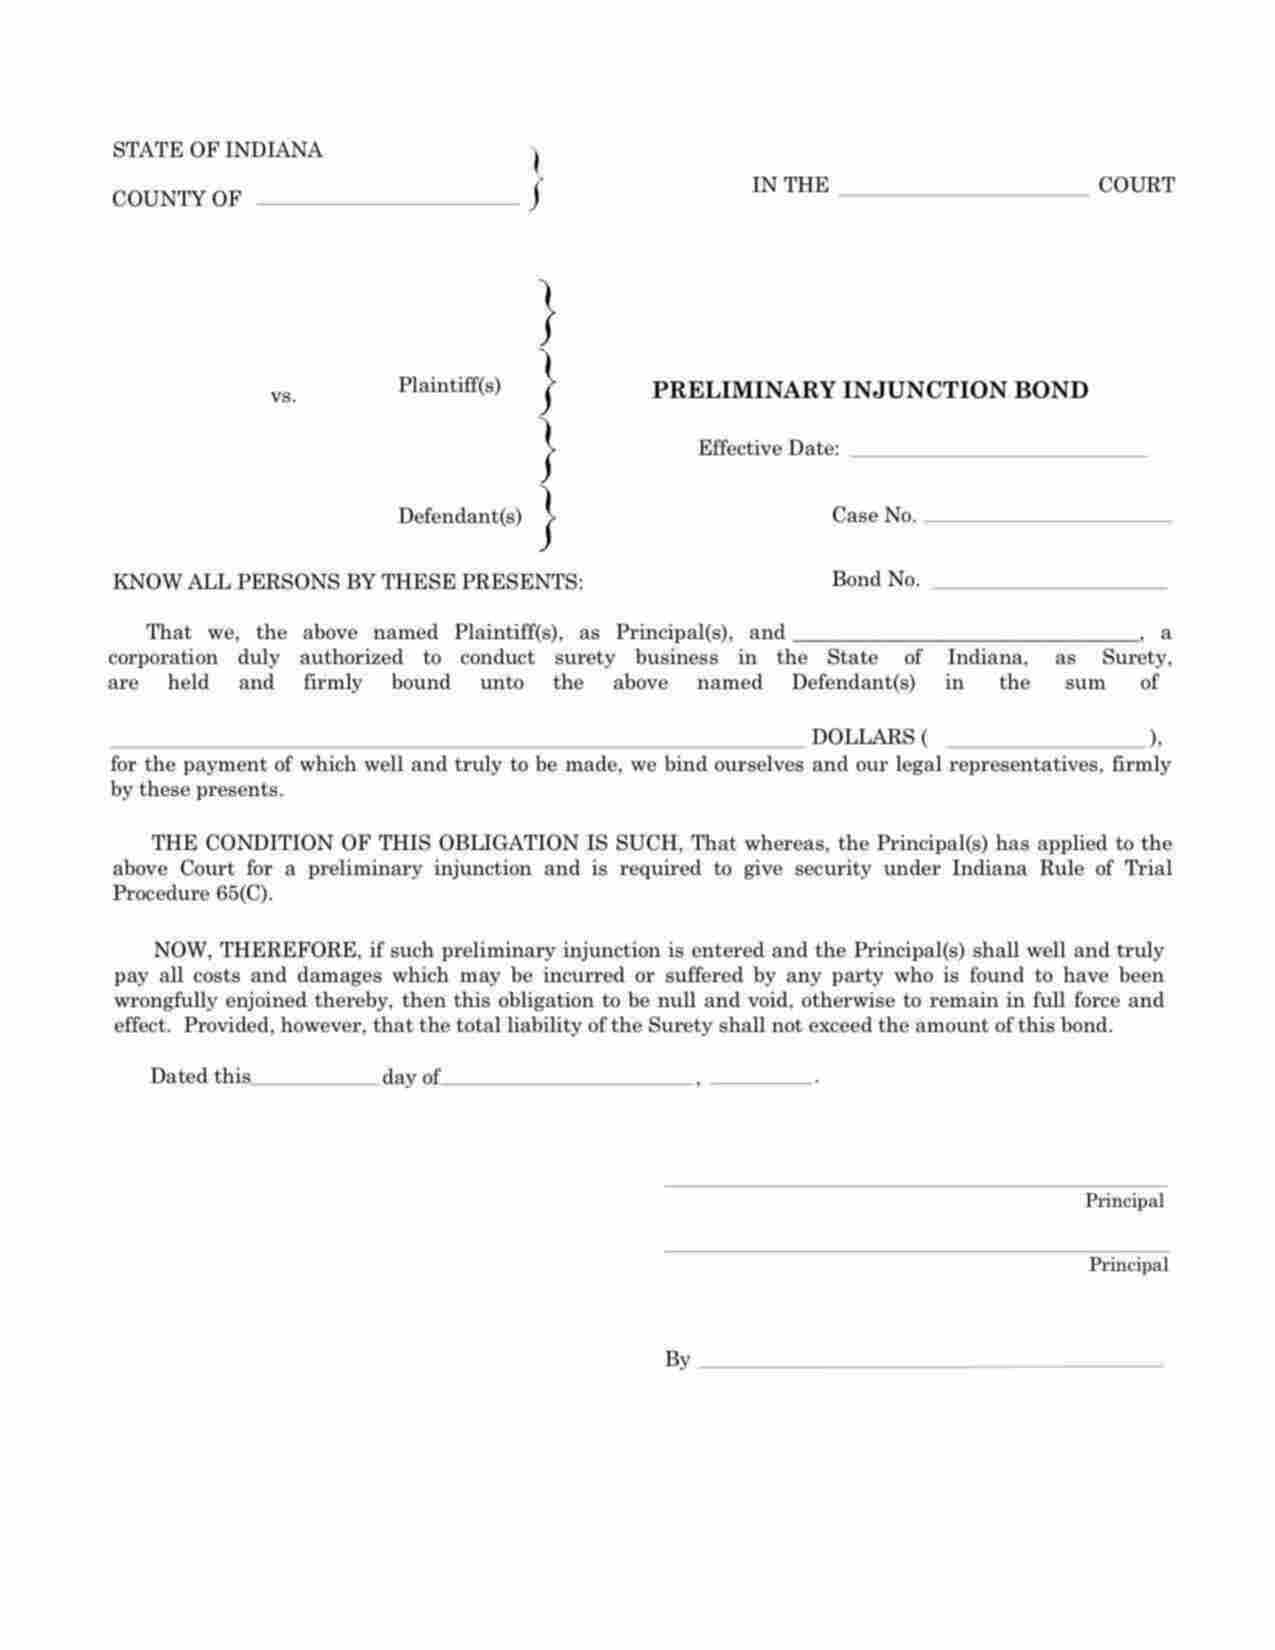 Indiana Preliminary Injunction Bond Form